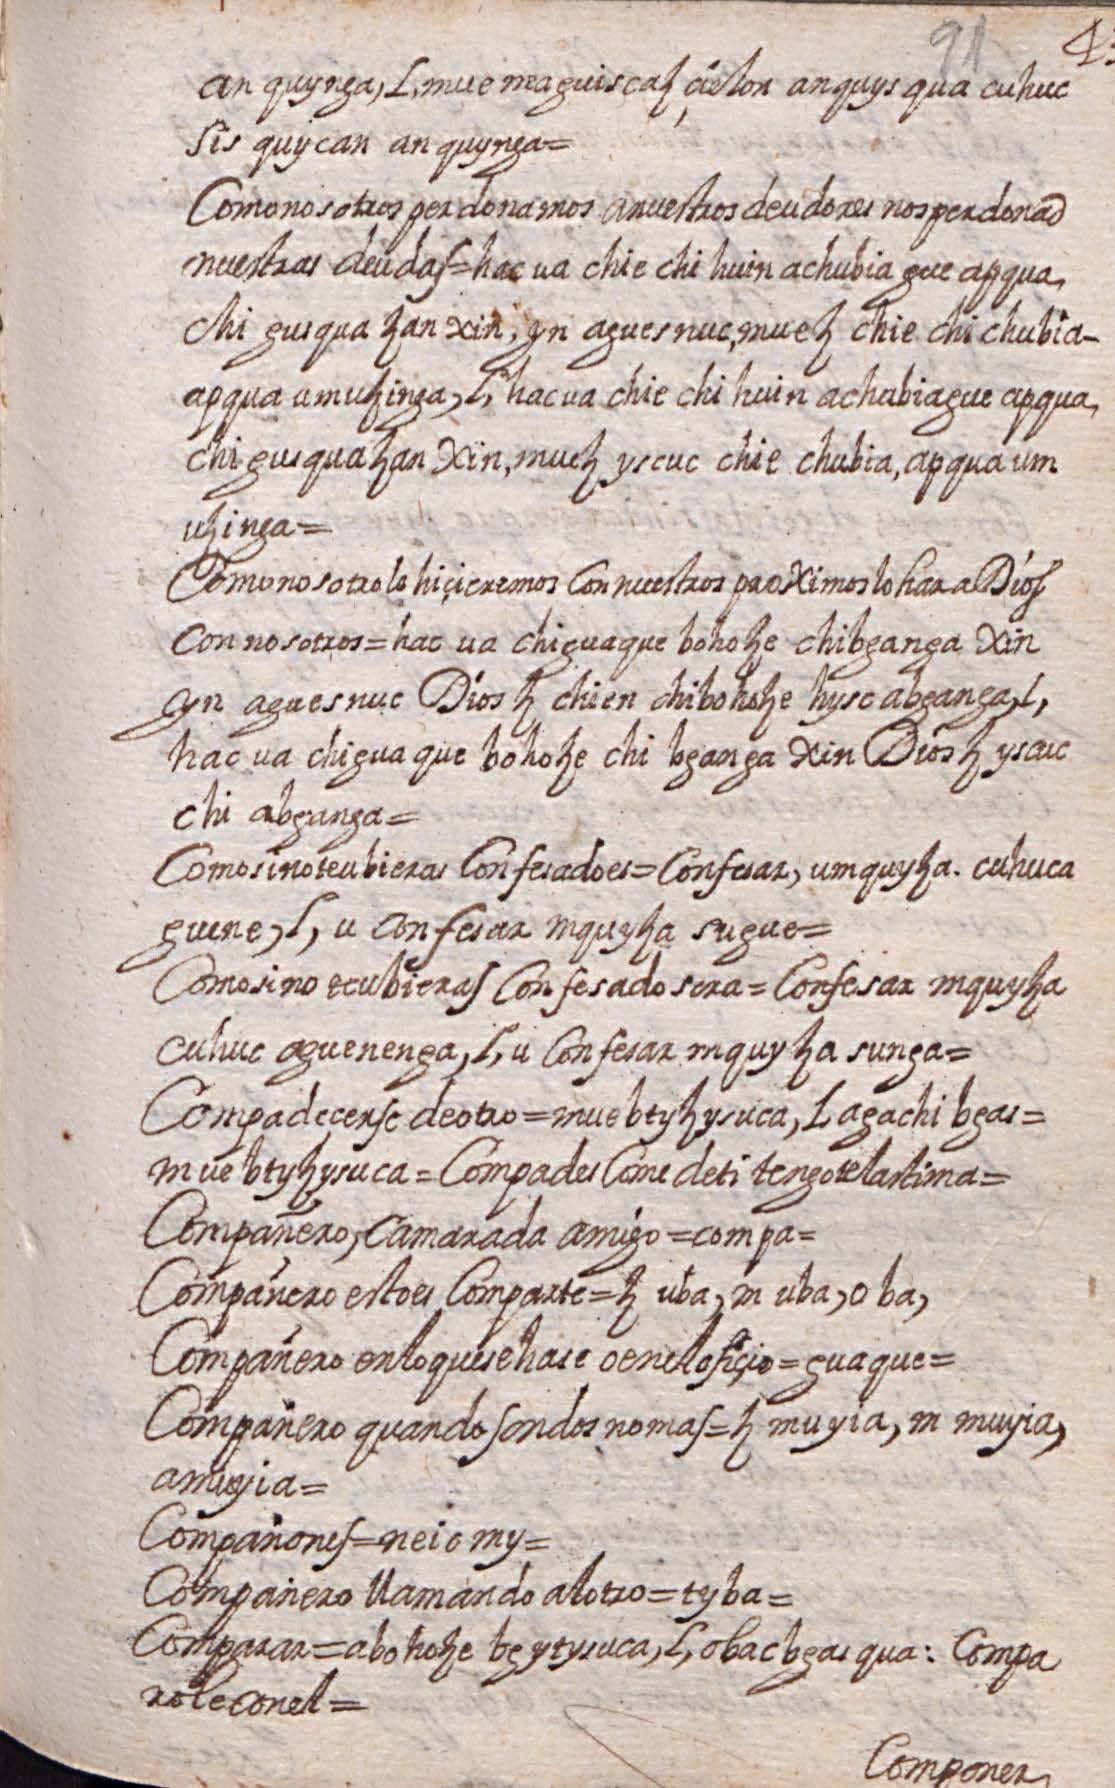 Manuscrito 158 BNC Vocabulario - fol 43r.jpg